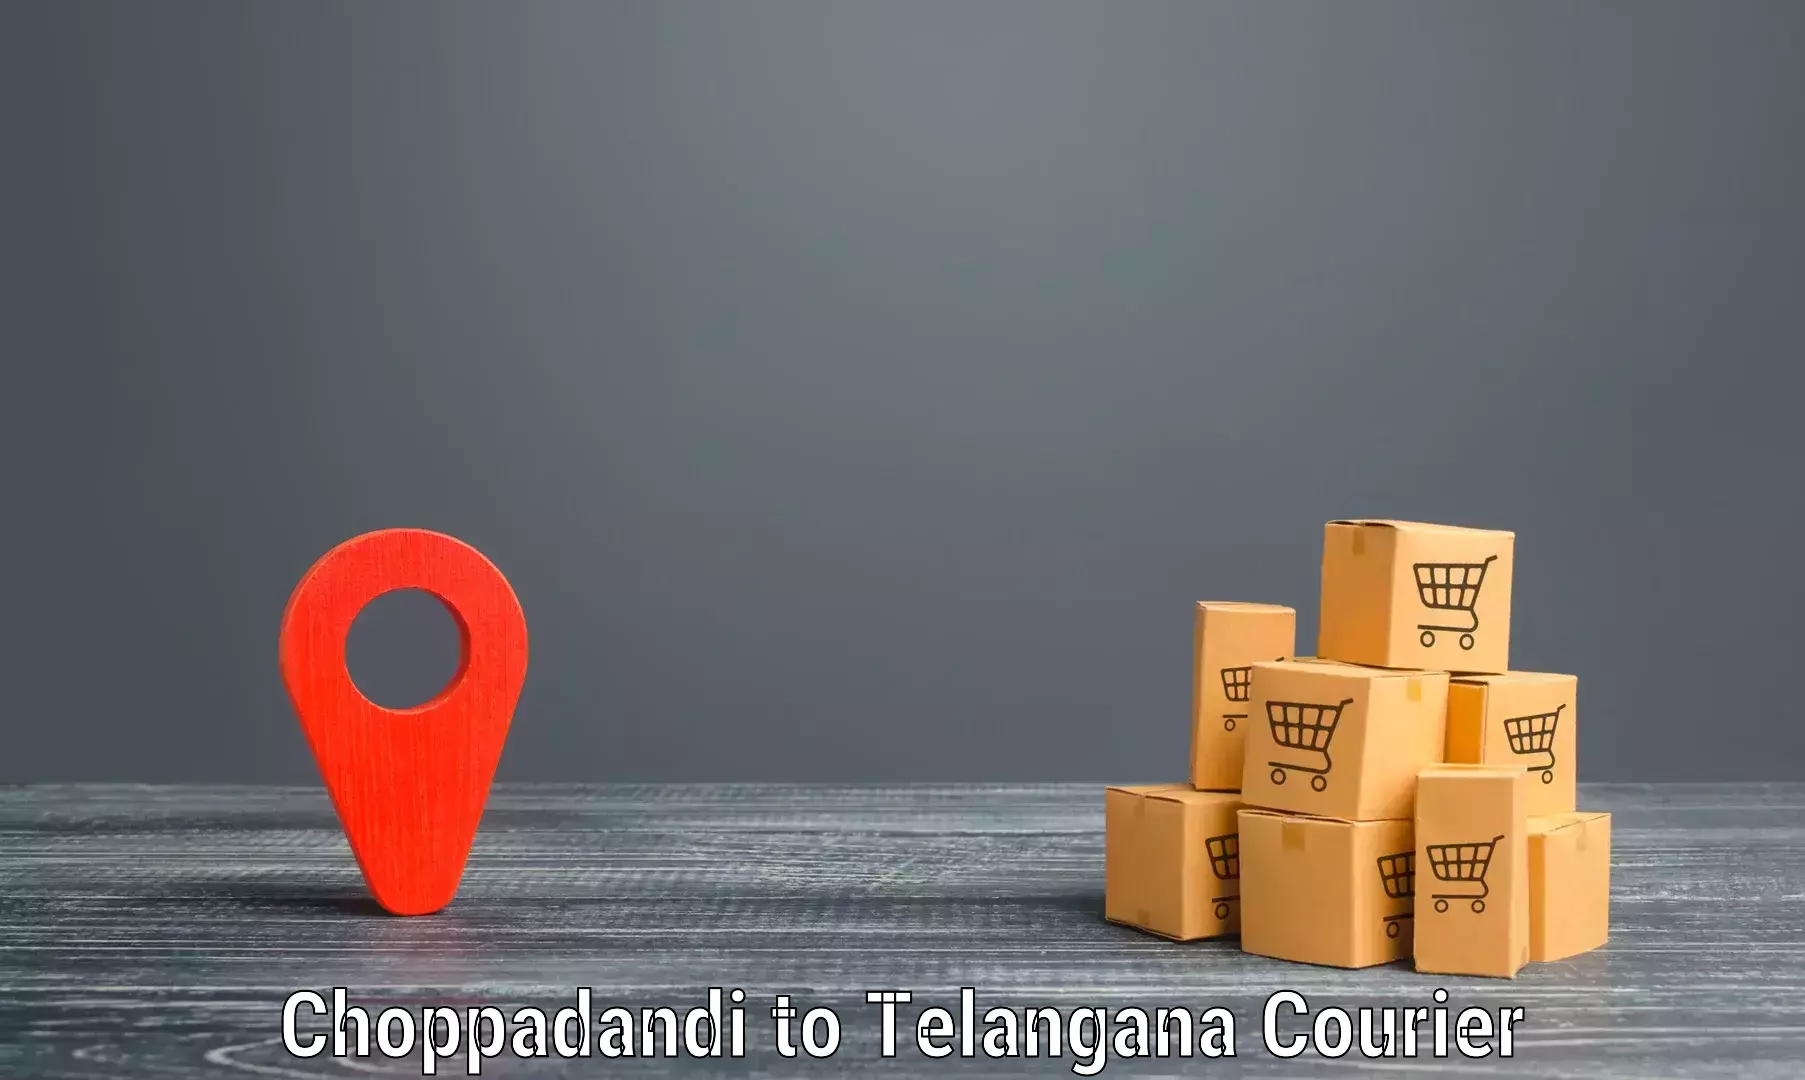 Express package handling in Choppadandi to Chandur